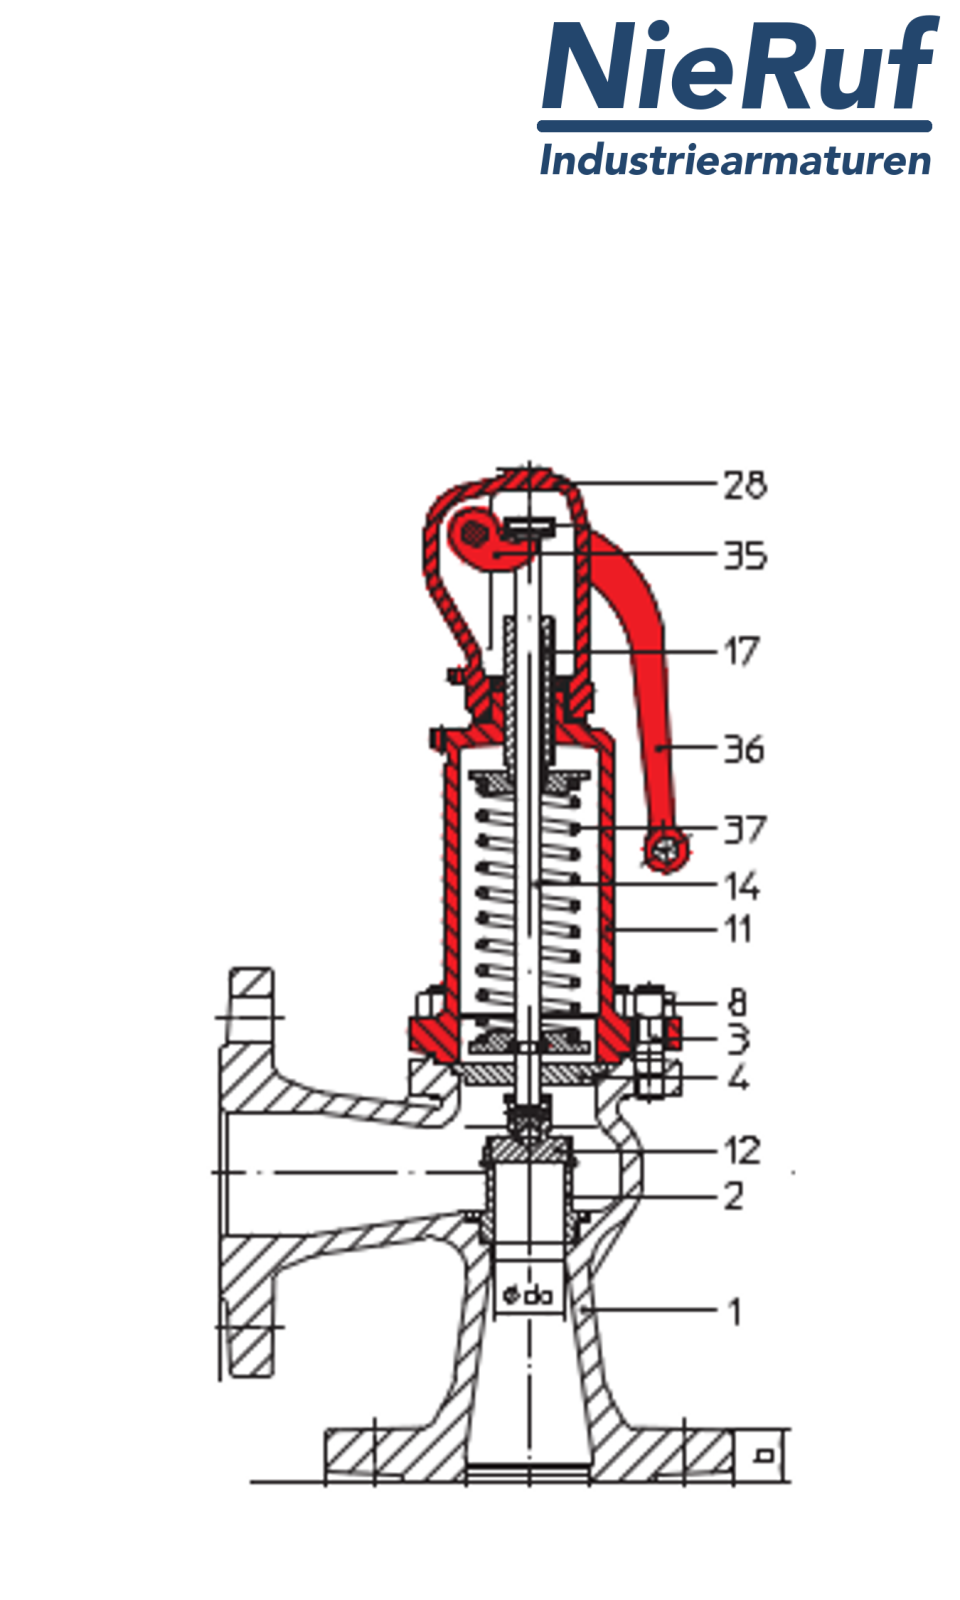 flange-safety valve DN80/DN80 SF02, cast steel 1.0619+N FPM, with lever